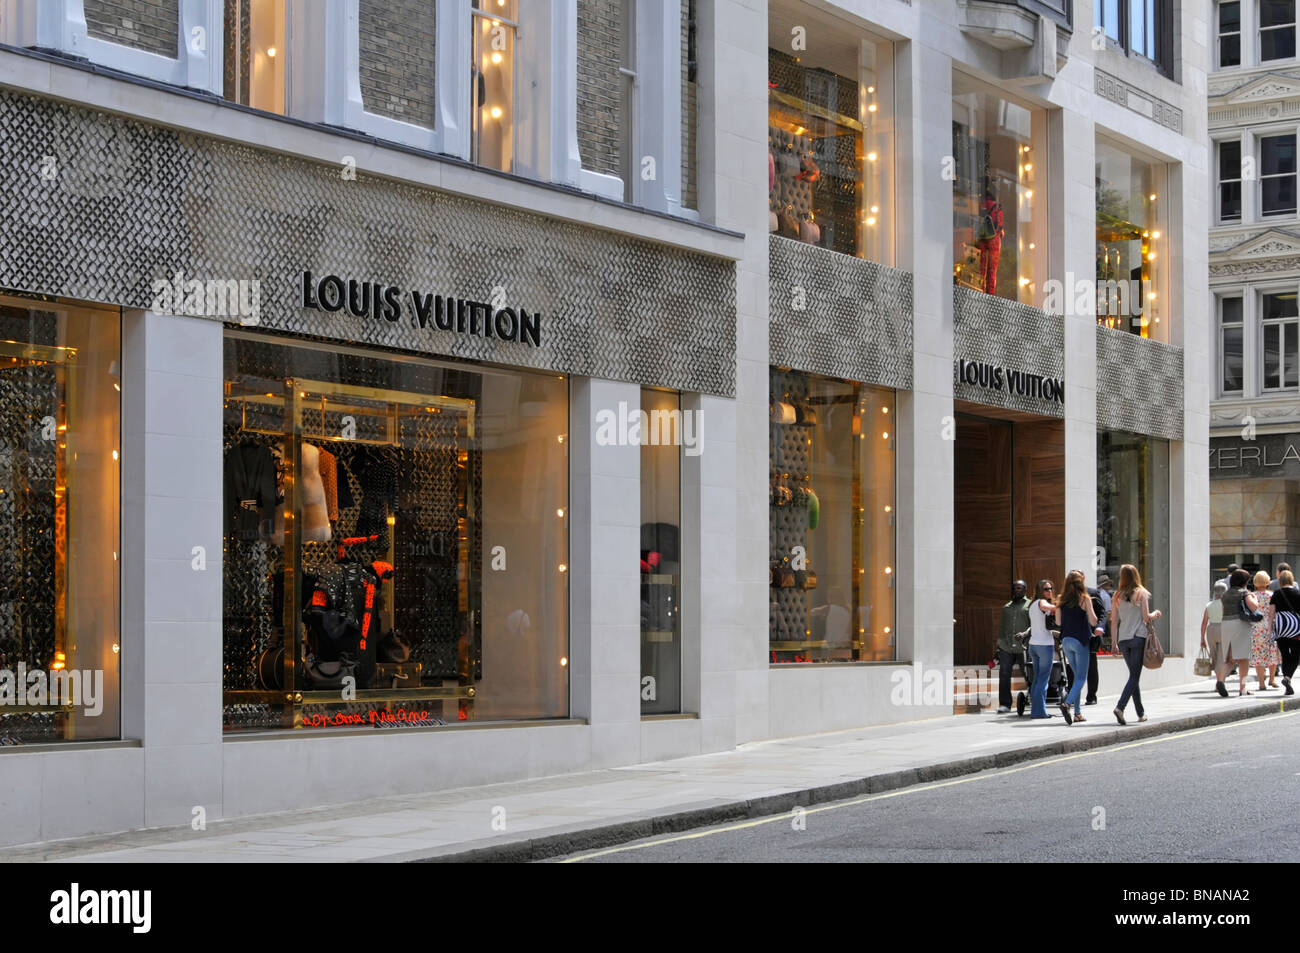 Louis Vuitton Store Front in London Stockfoto, Bild: 30354410 - Alamy